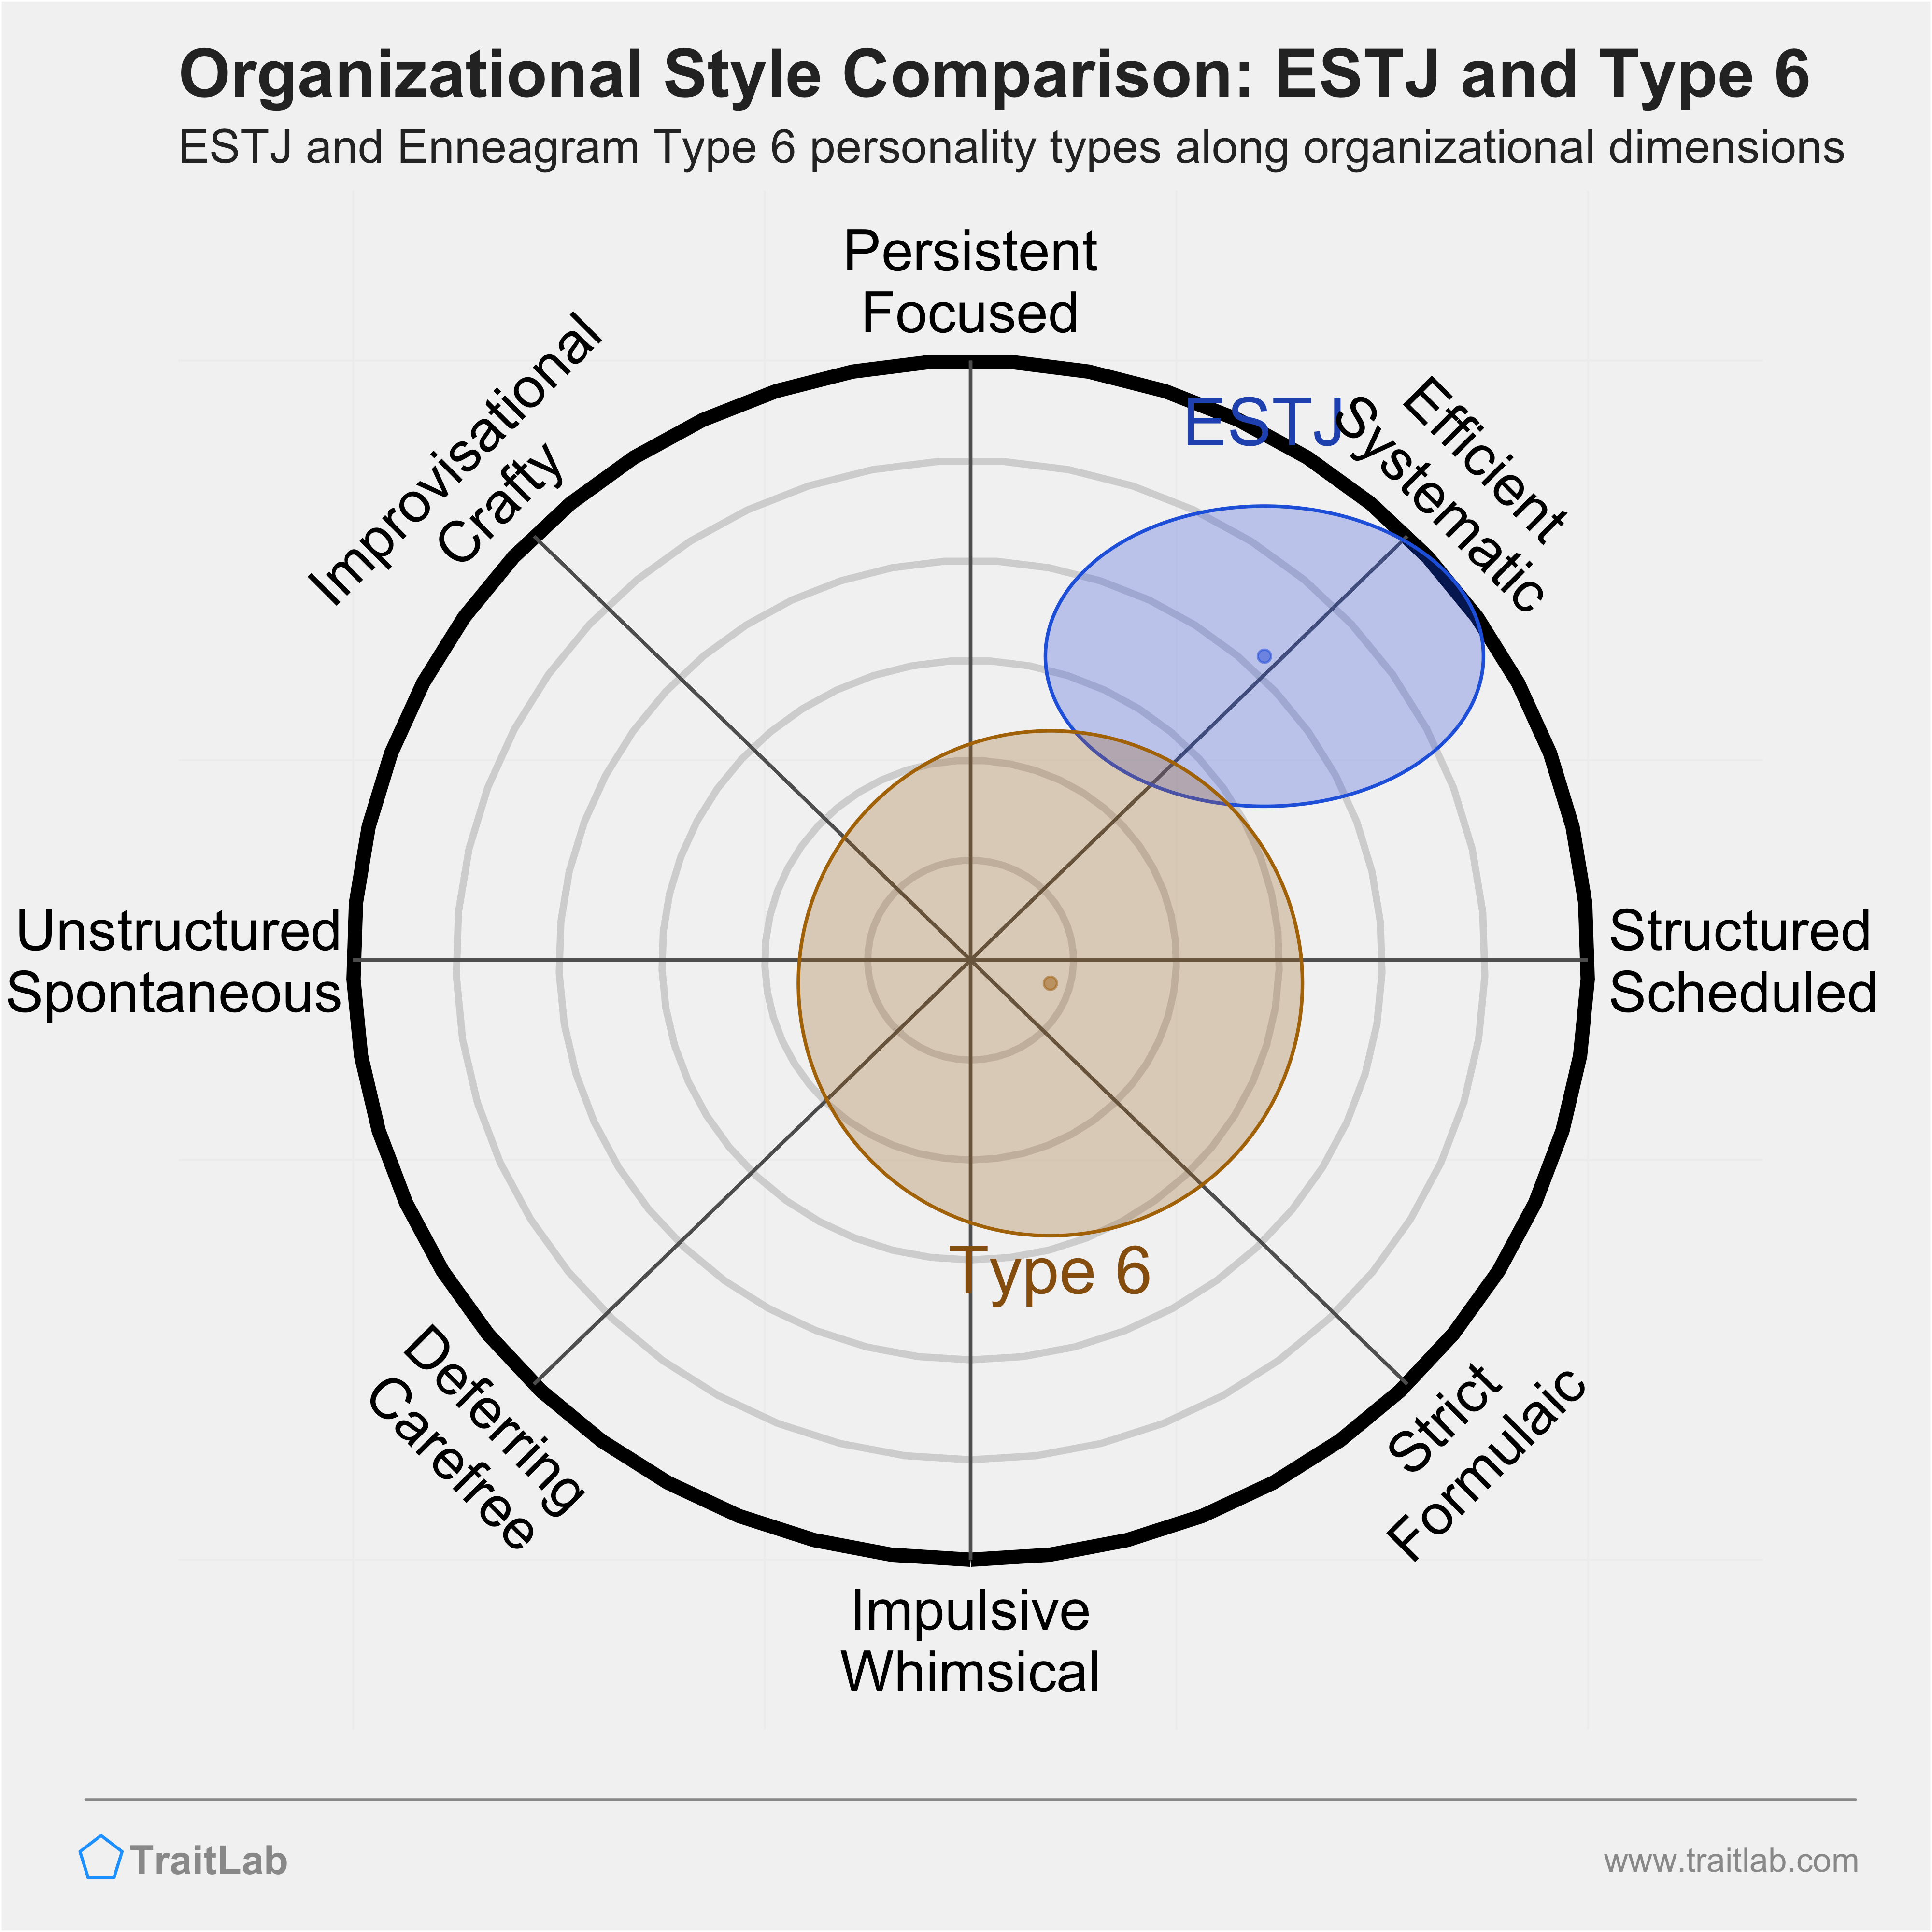 ESTJ and Type 6 comparison across organizational dimensions